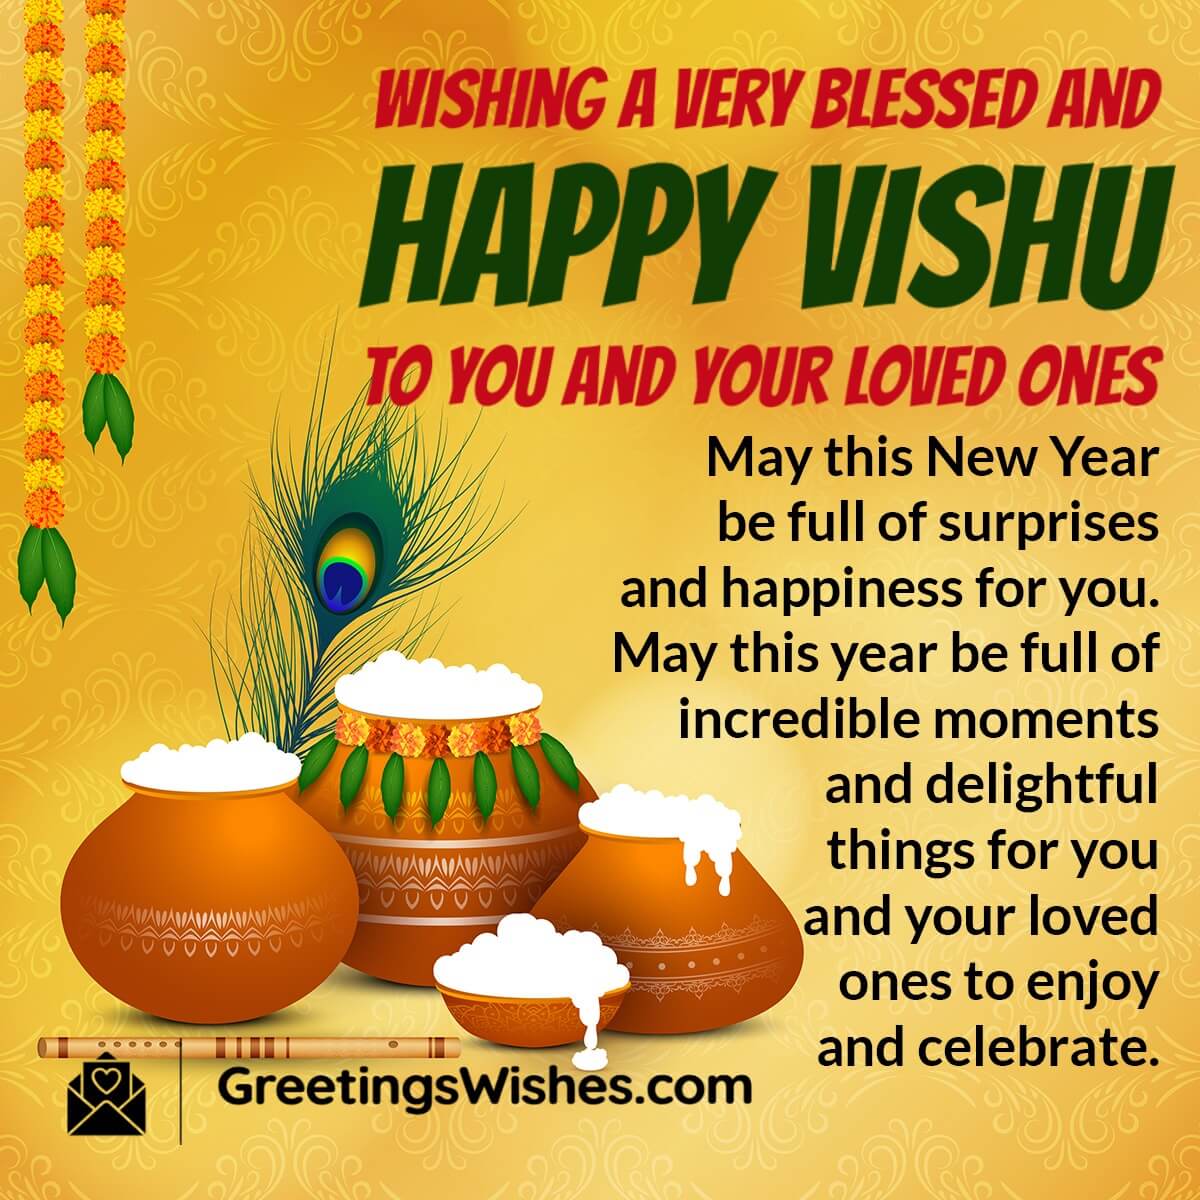 Vishu Wishes Messages